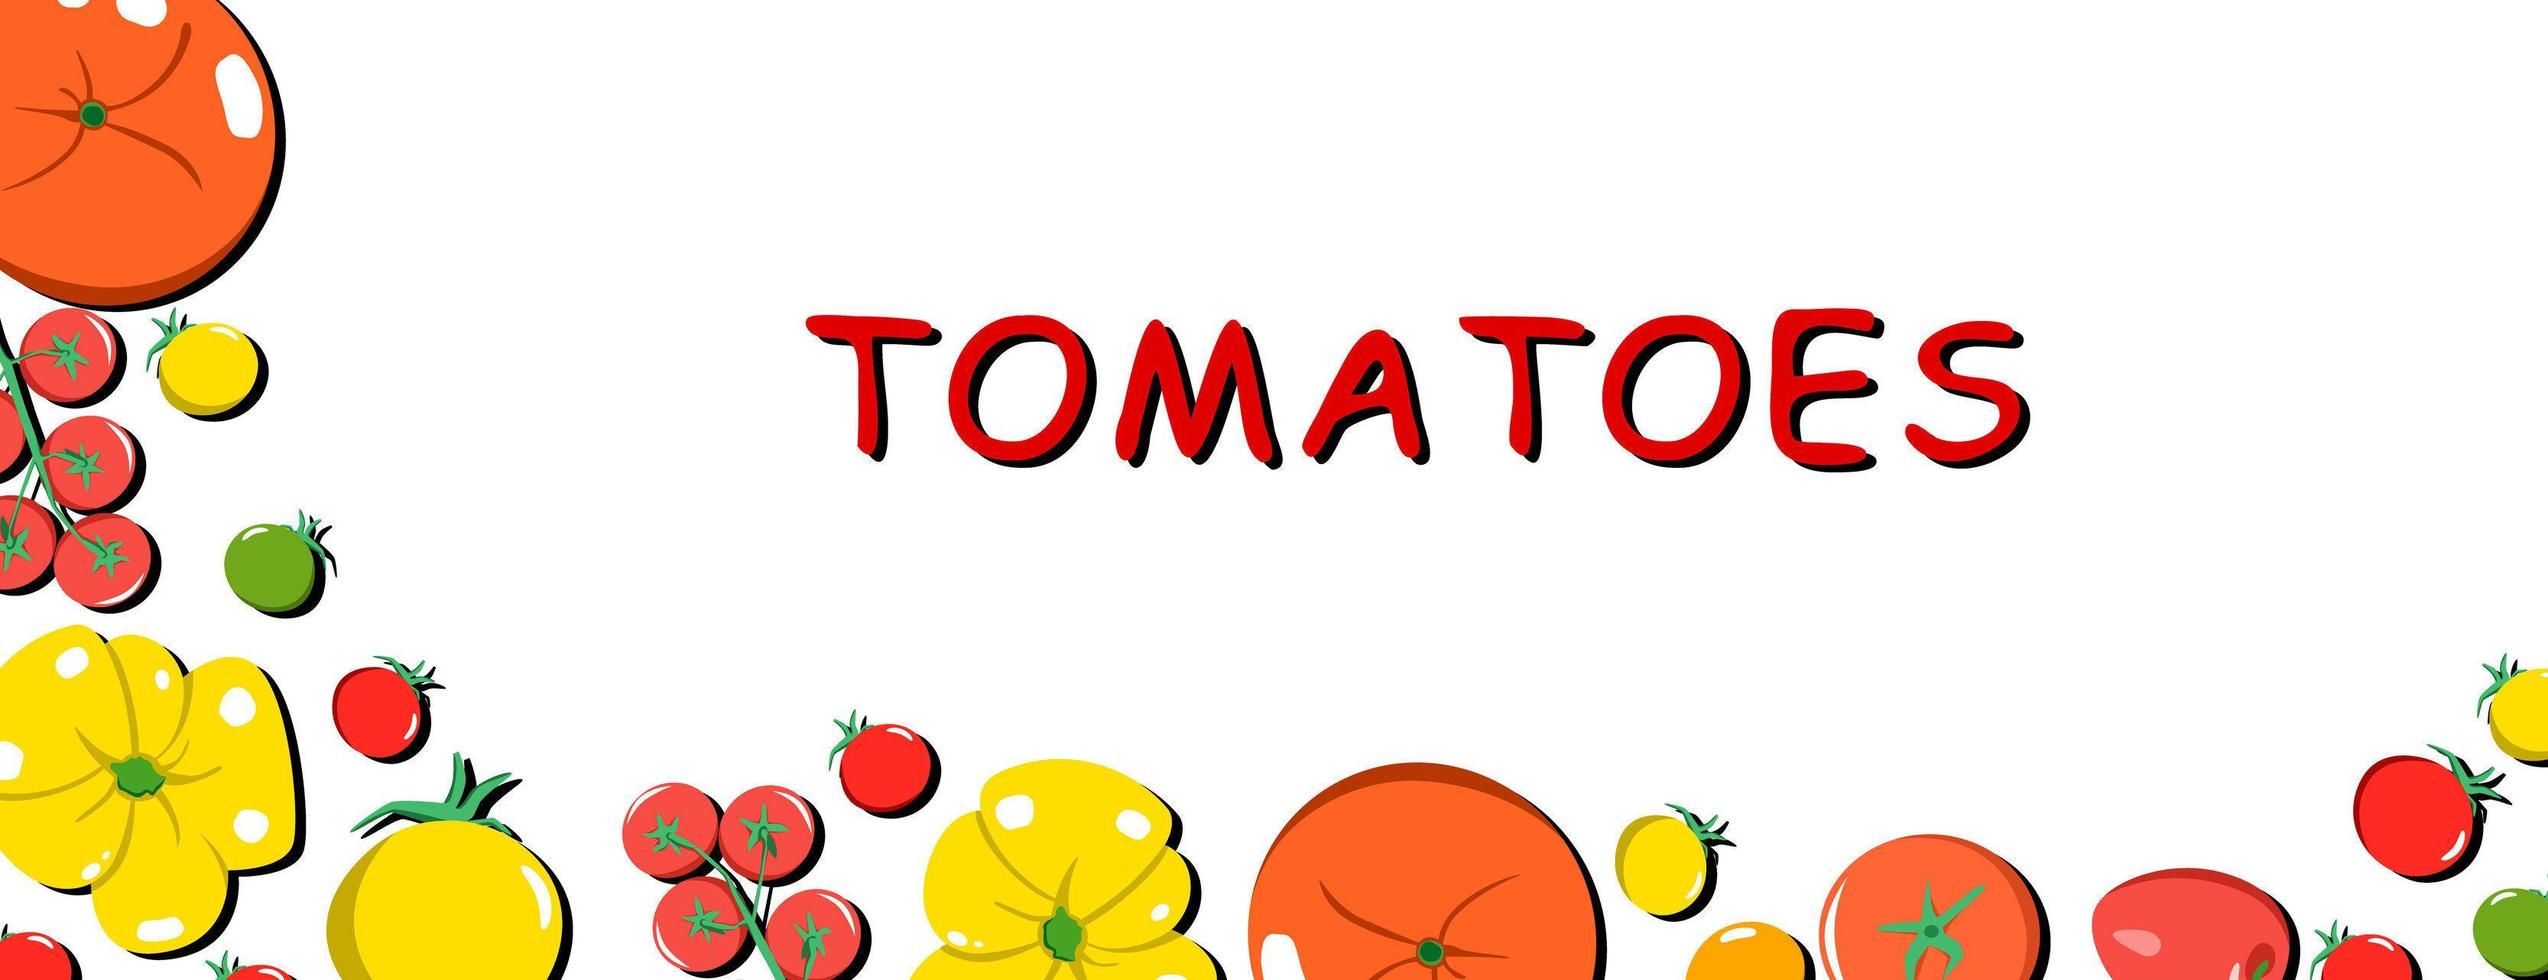 bandeira vetorial brilhante de diferentes variedades de tomates. vetor